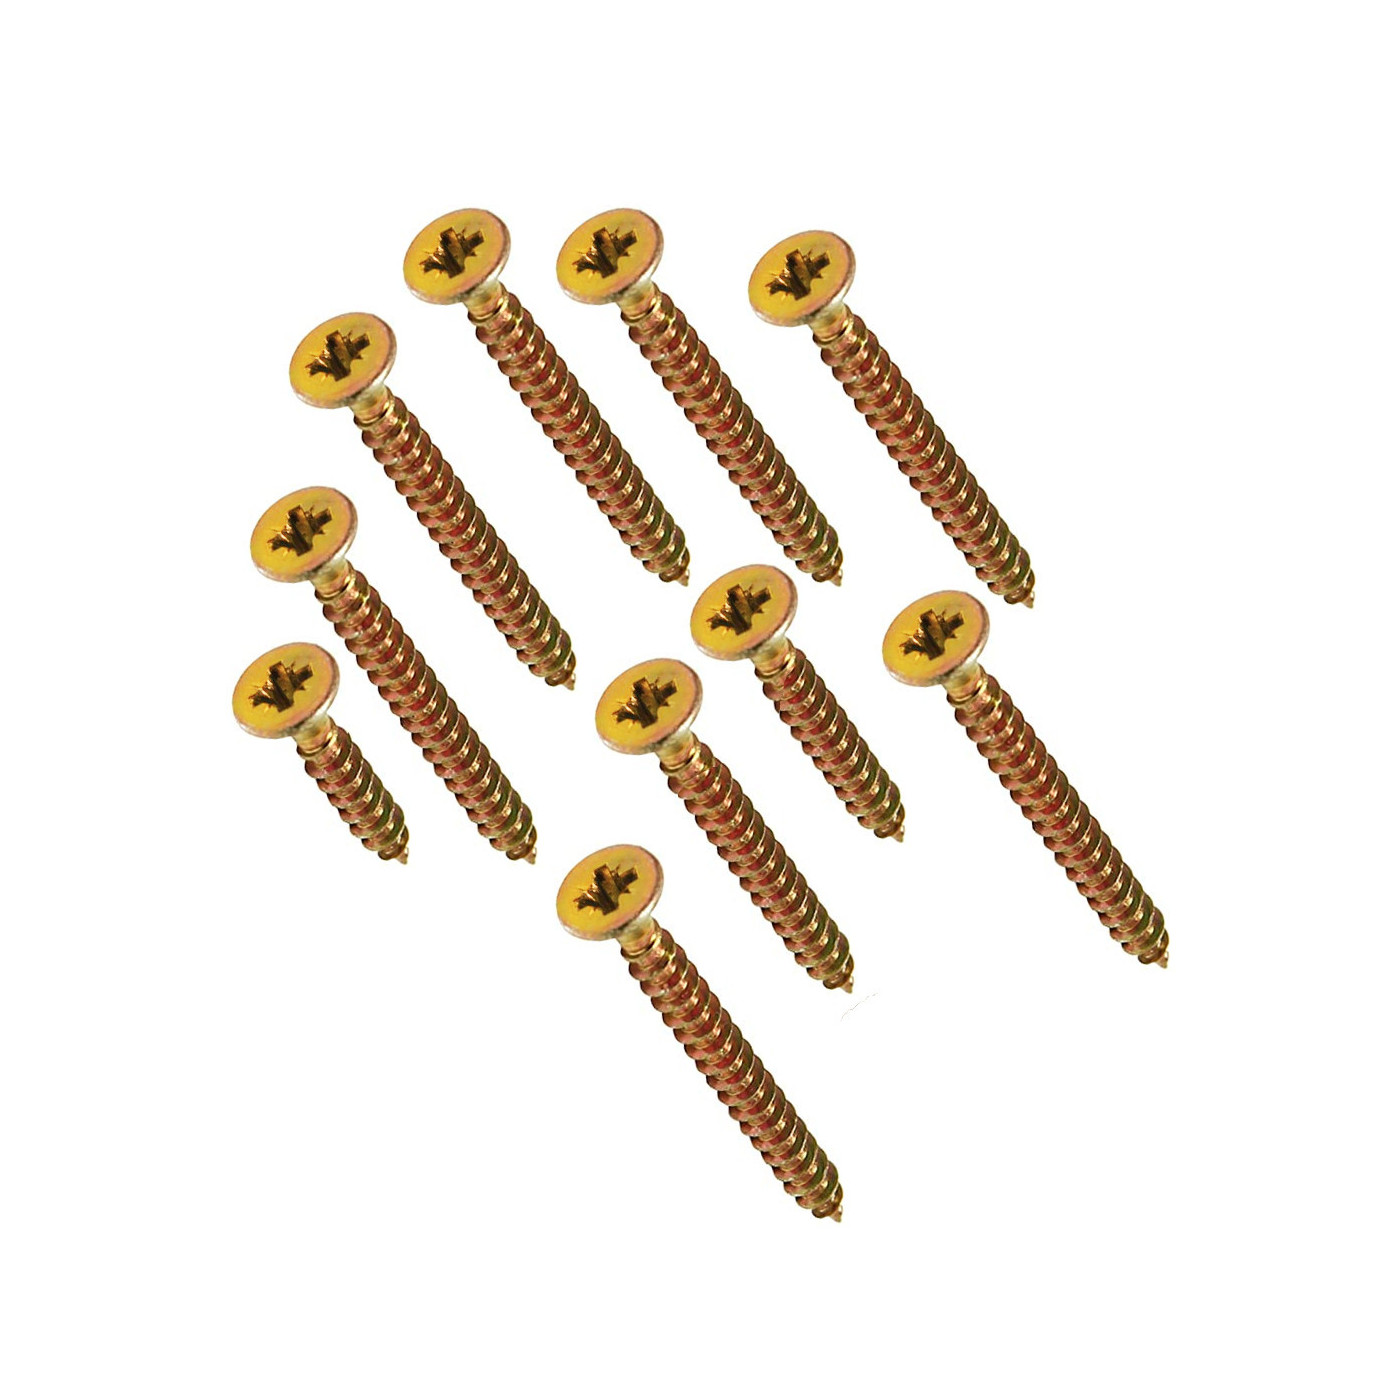 Big set of 664 philips screws in 2 boxes (3-4 mm dia, 16-50 mm